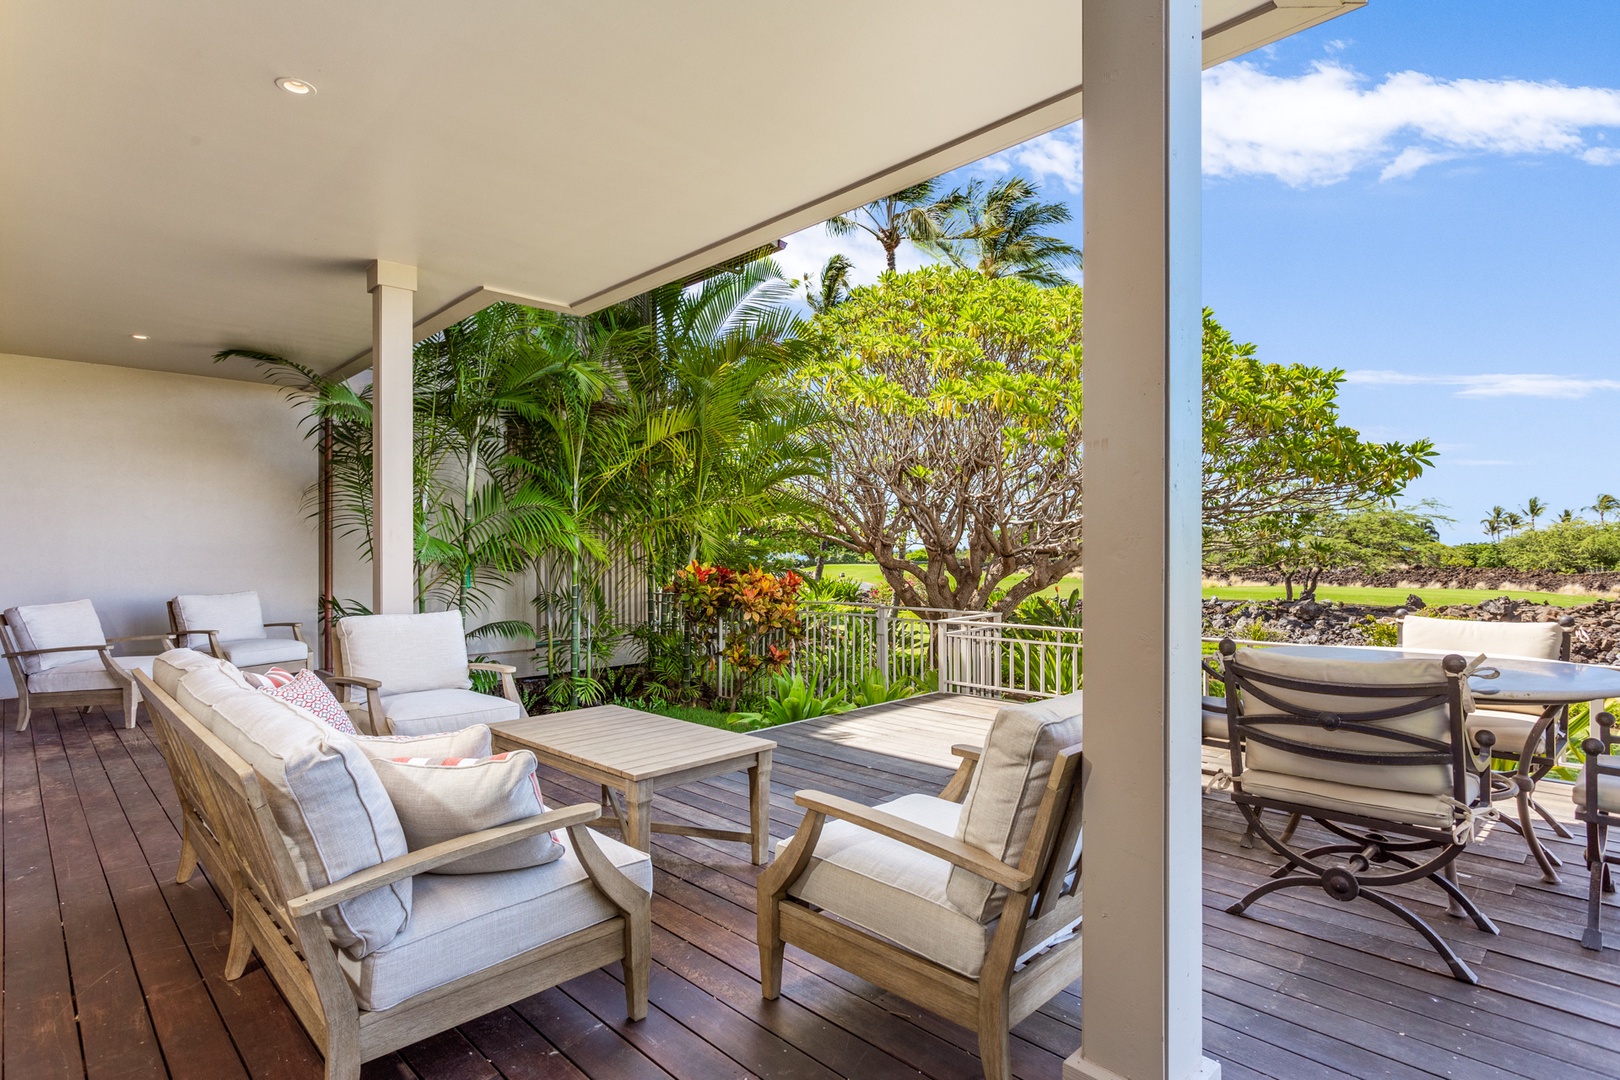 Kailua Kona Vacation Rentals, 3BD Ka'Ulu Villa (129D) at Four Seasons Resort at Hualalai - Alternate view of lower deck seating.